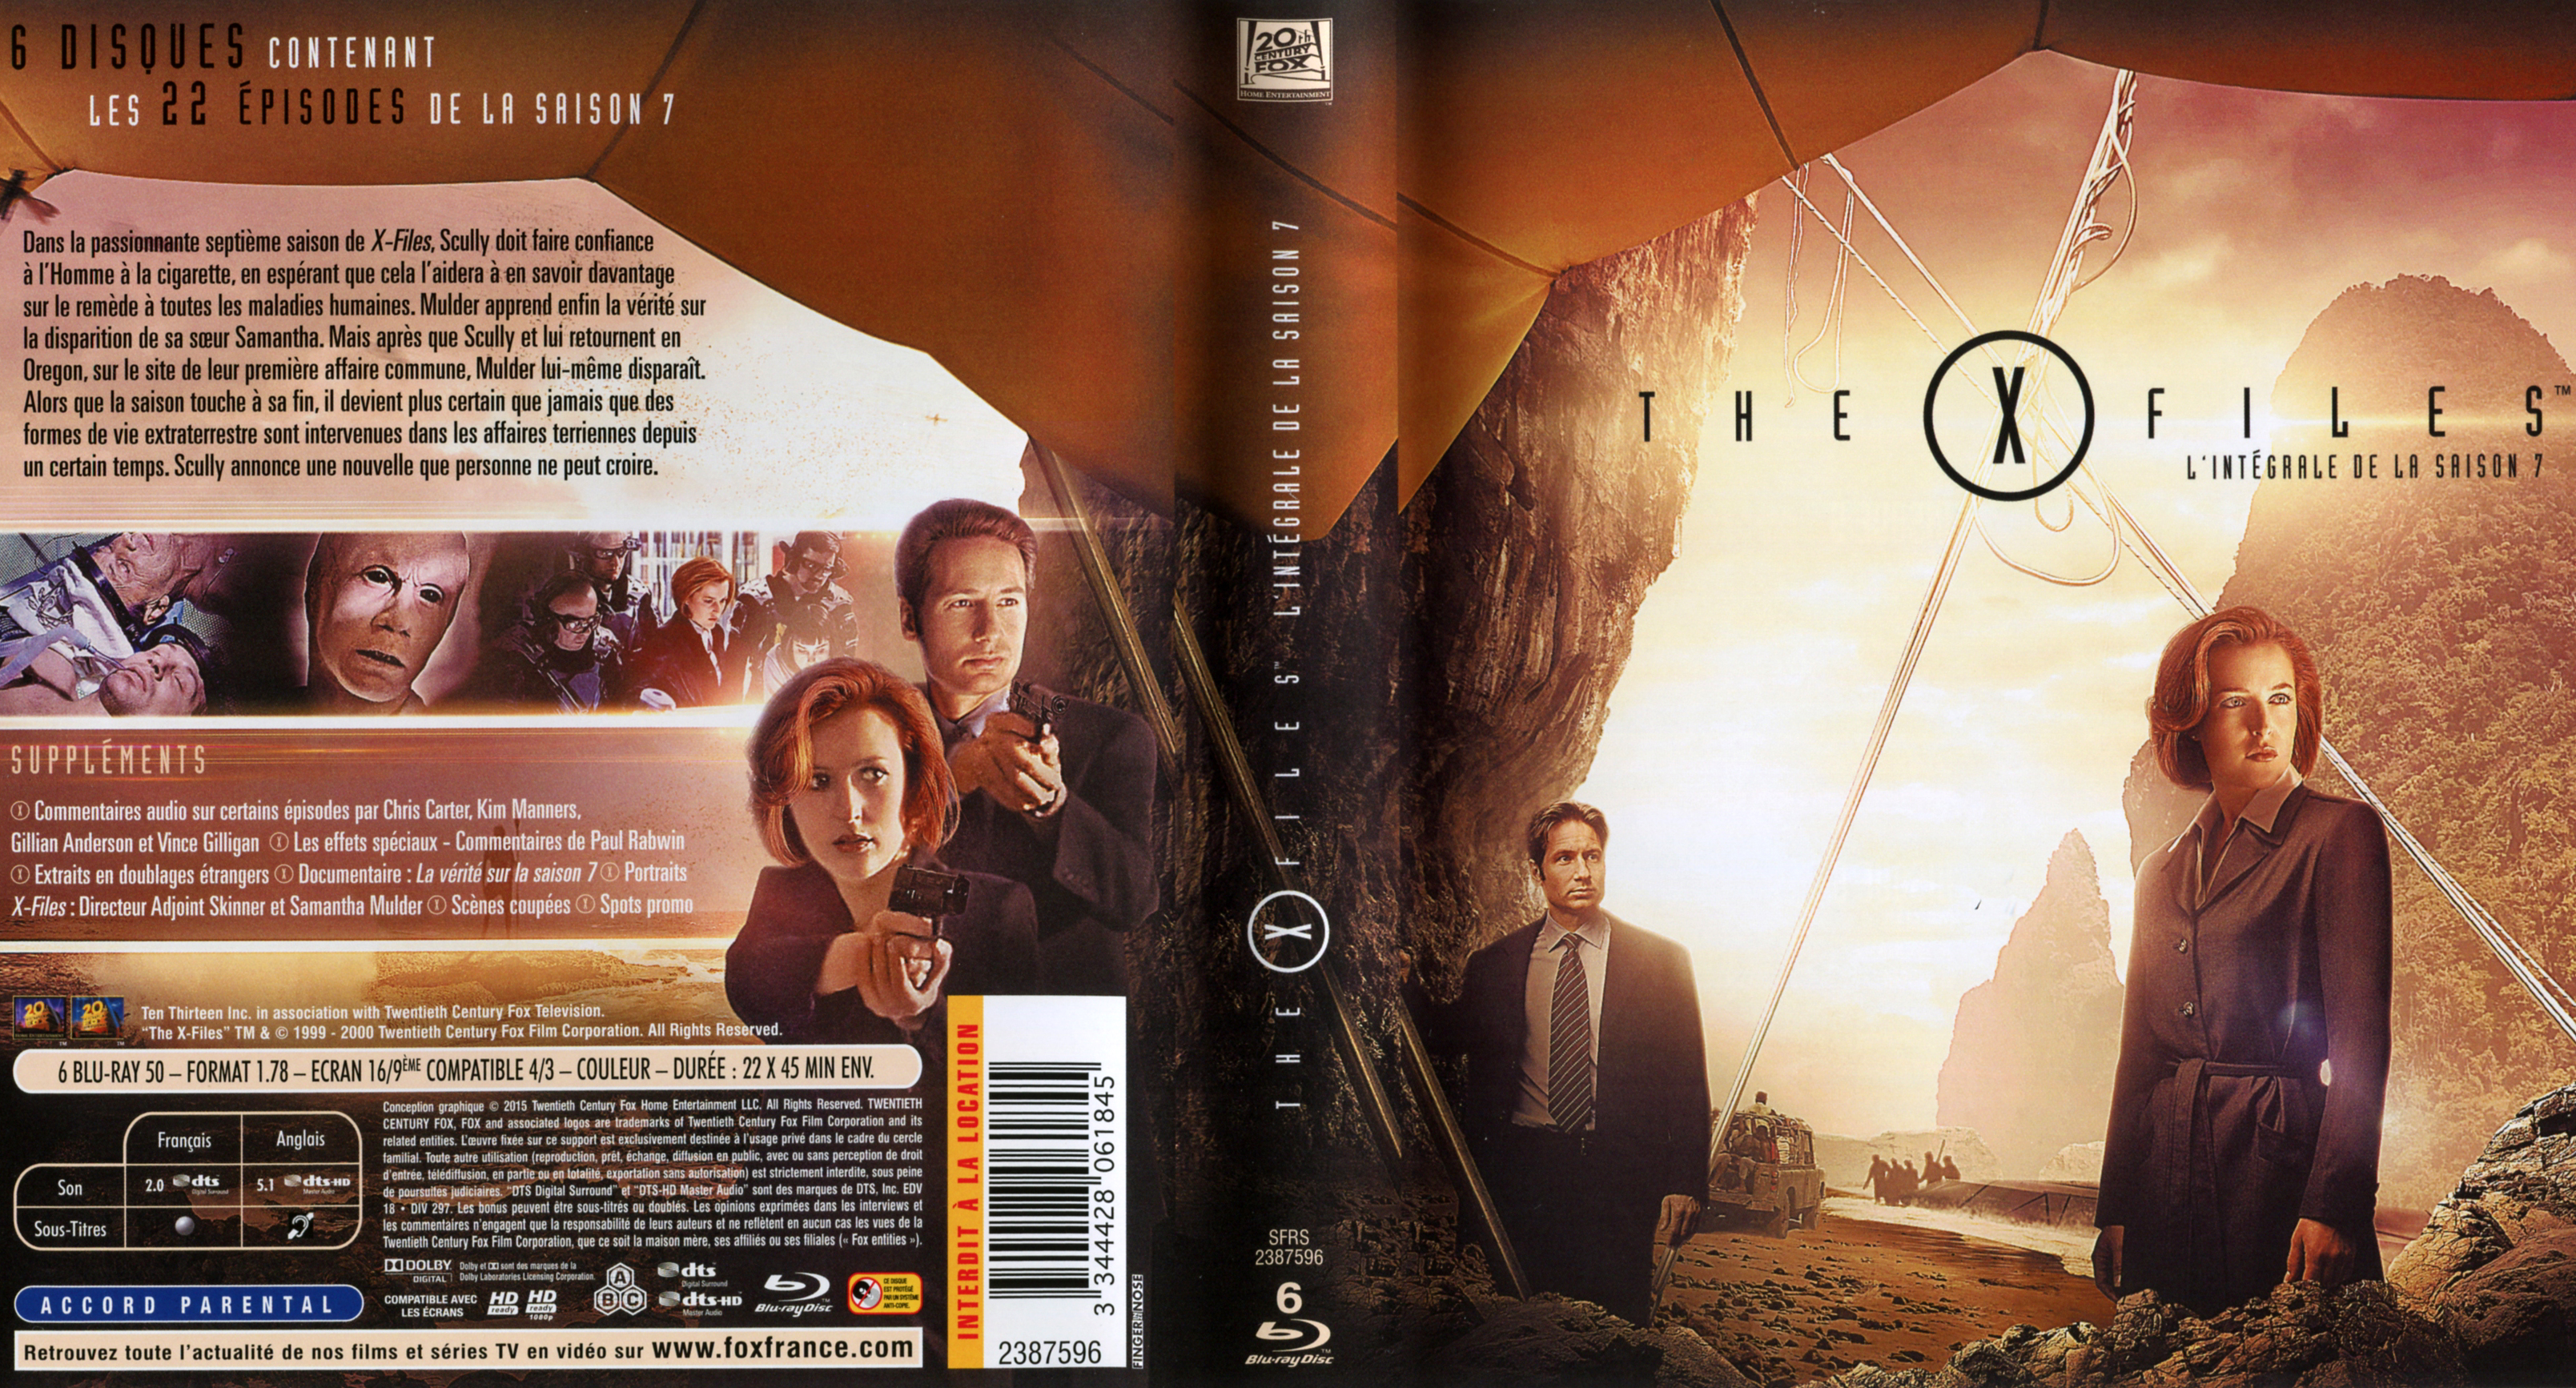 Jaquette DVD X Files saison 7 (BLU-RAY)